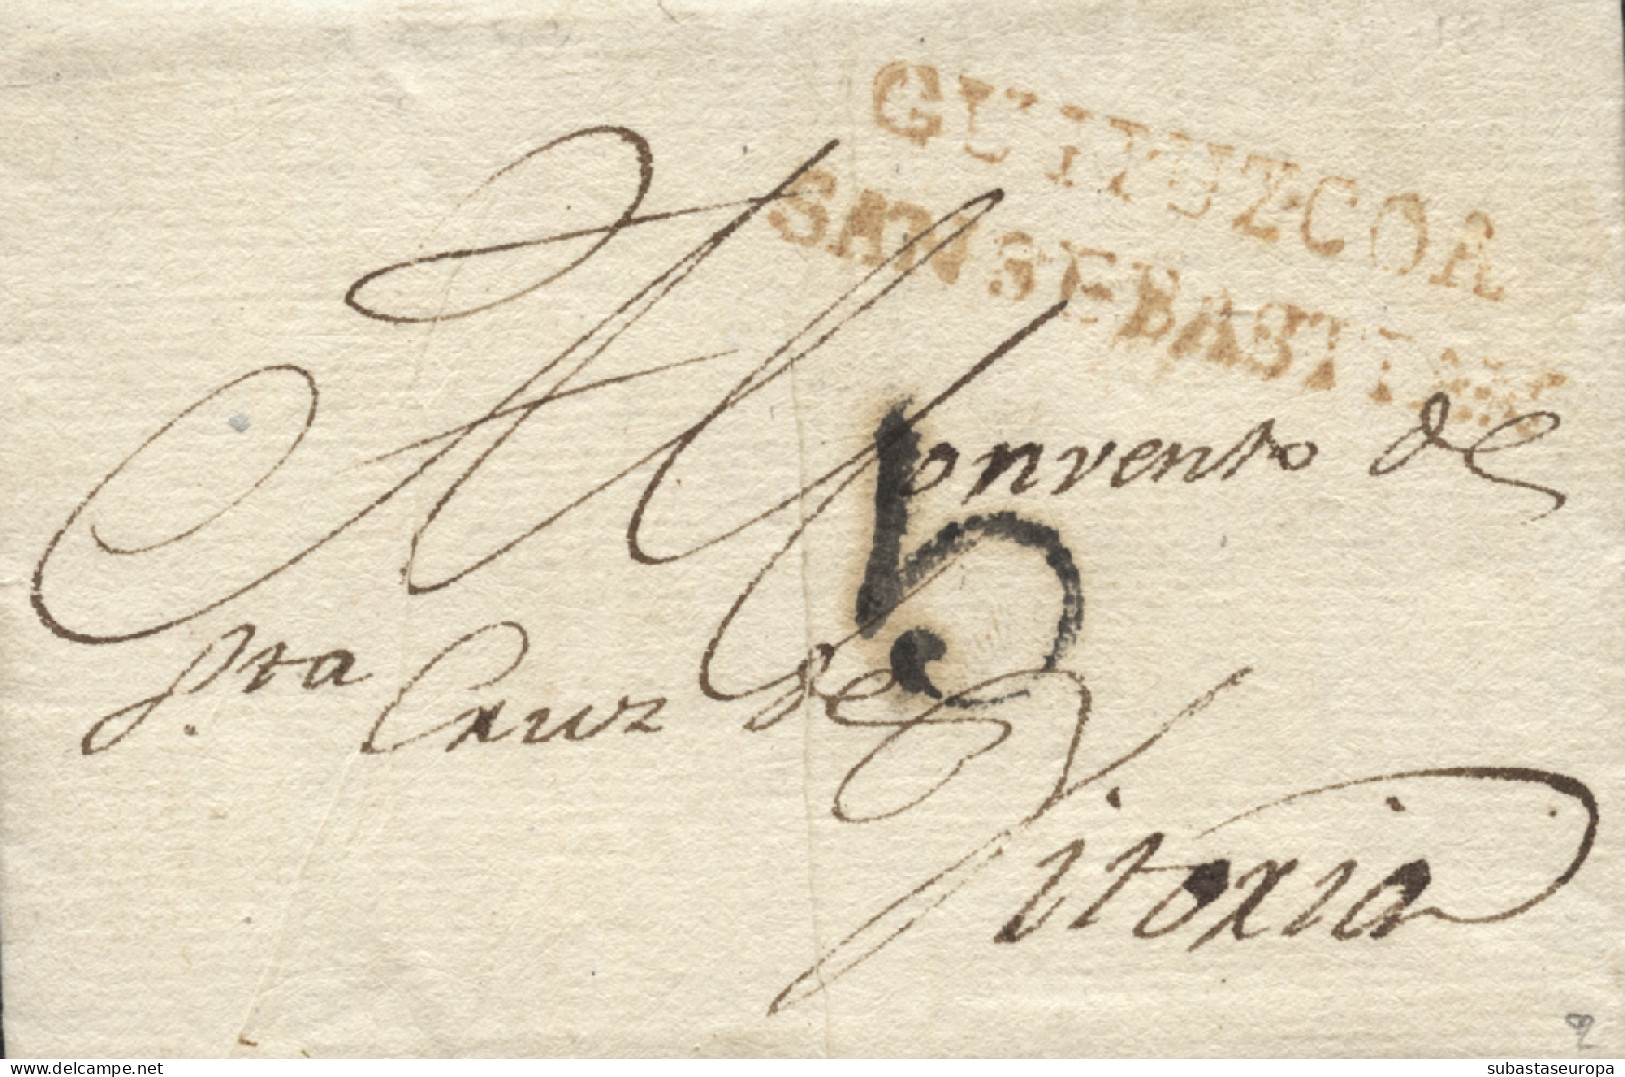 D.P. 11. 1812 (8 JUN). Carta De San Sebastián A Vitoria. Marca Nº 20R. Porteo 5 Mms. Preciosa. - ...-1850 Préphilatélie